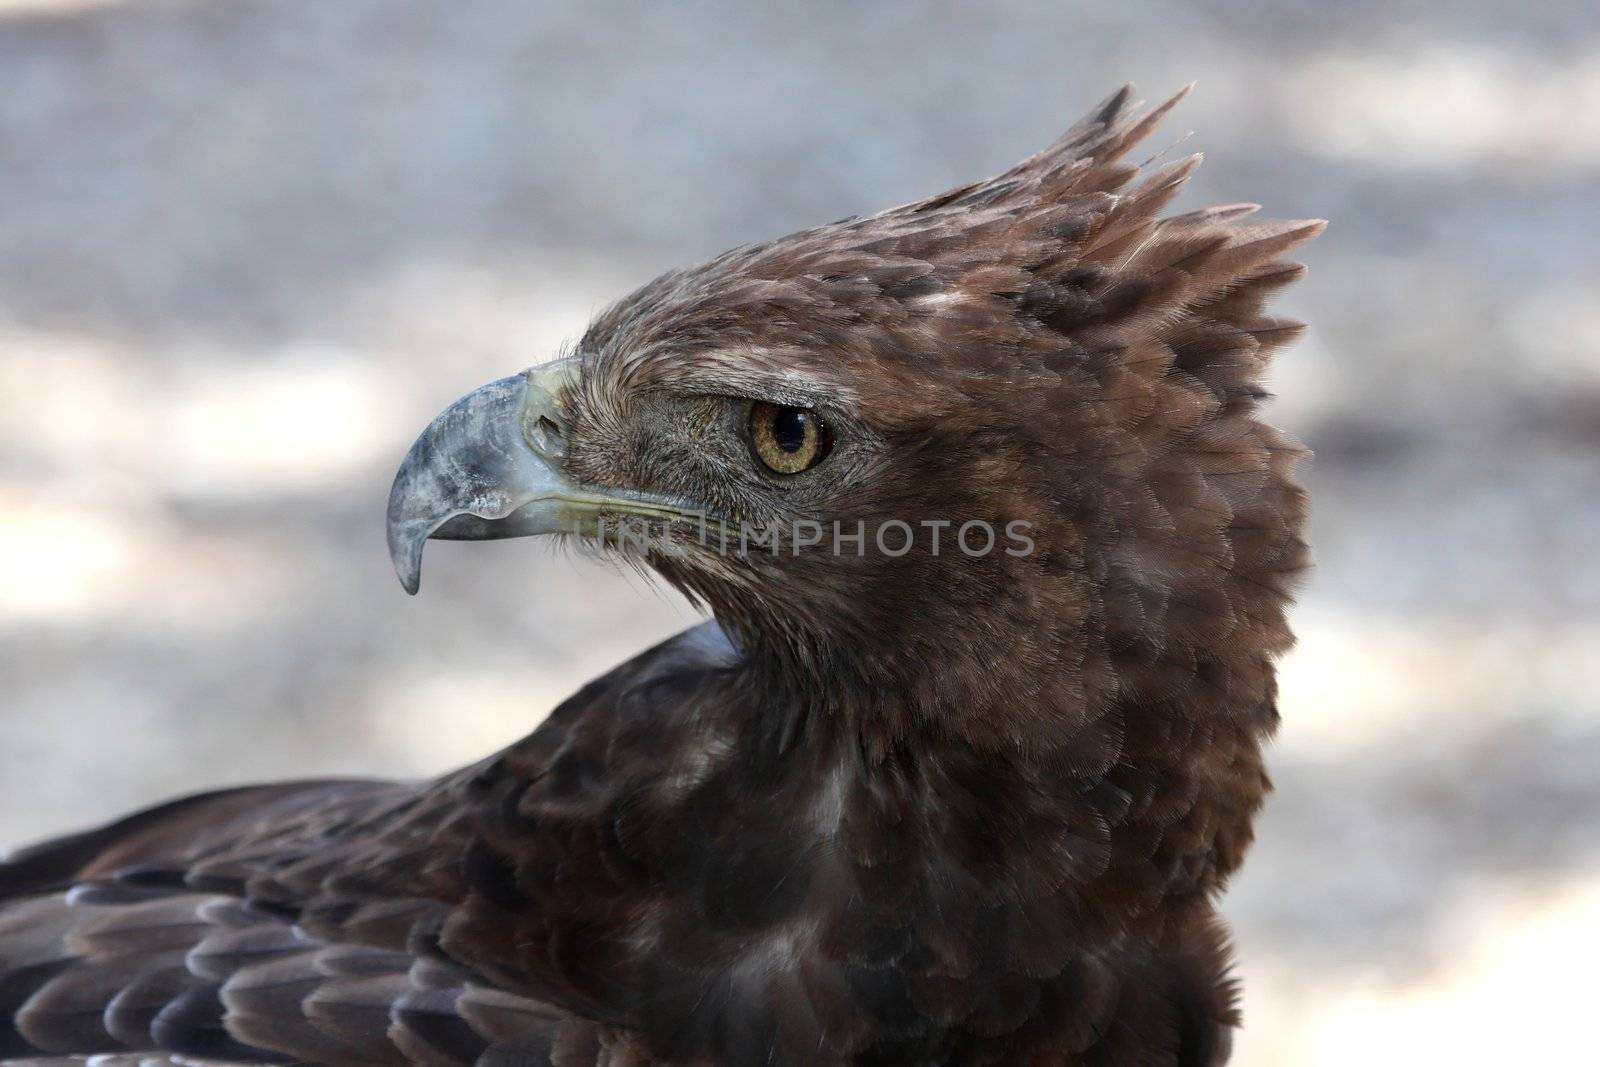 Crested Eagle by fouroaks